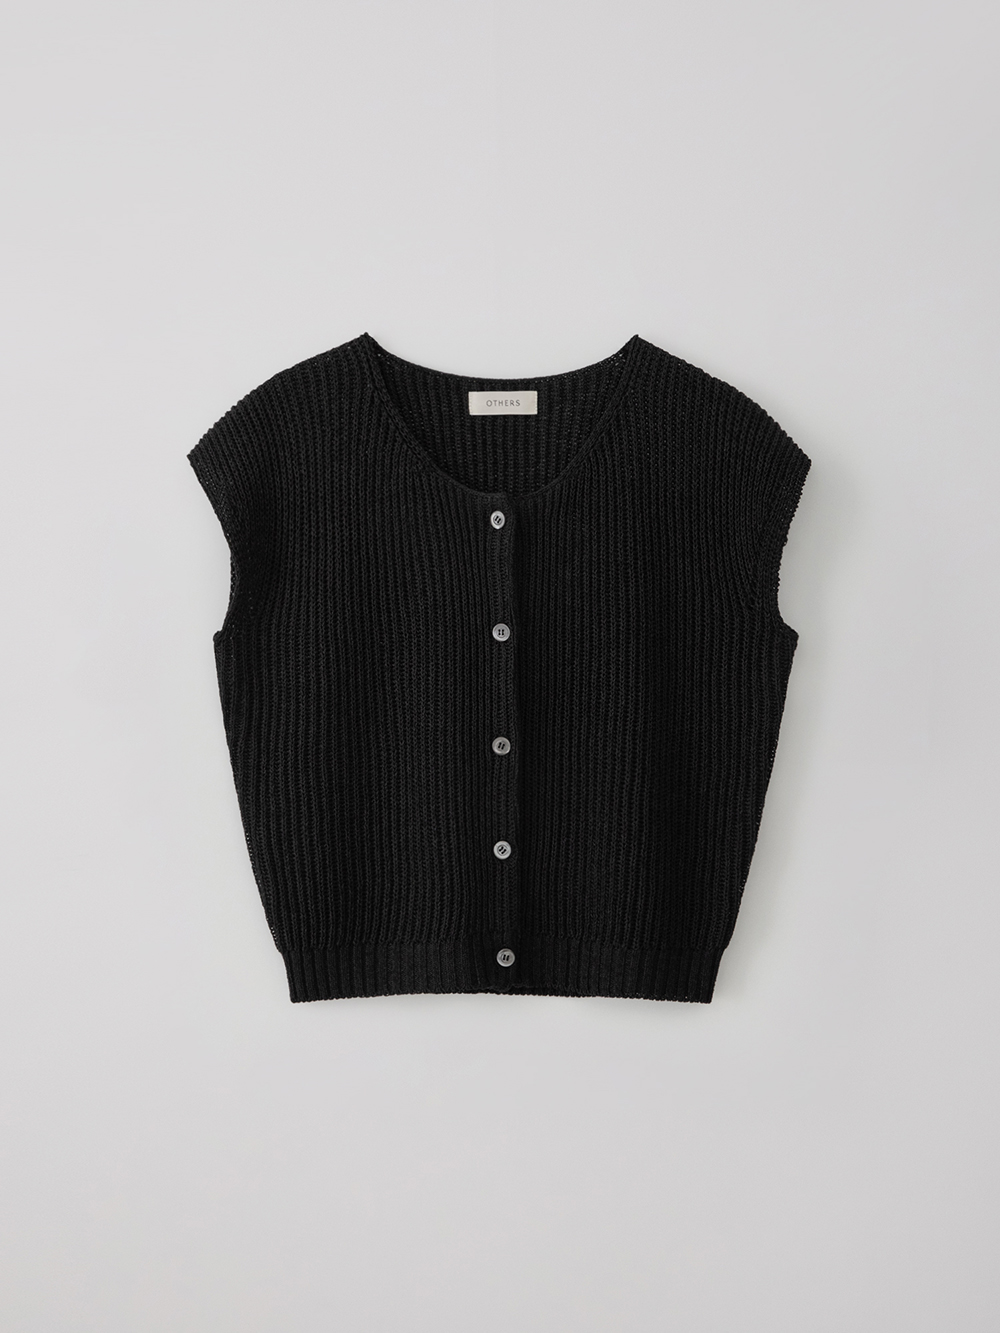 Paper knit cardigan (black)